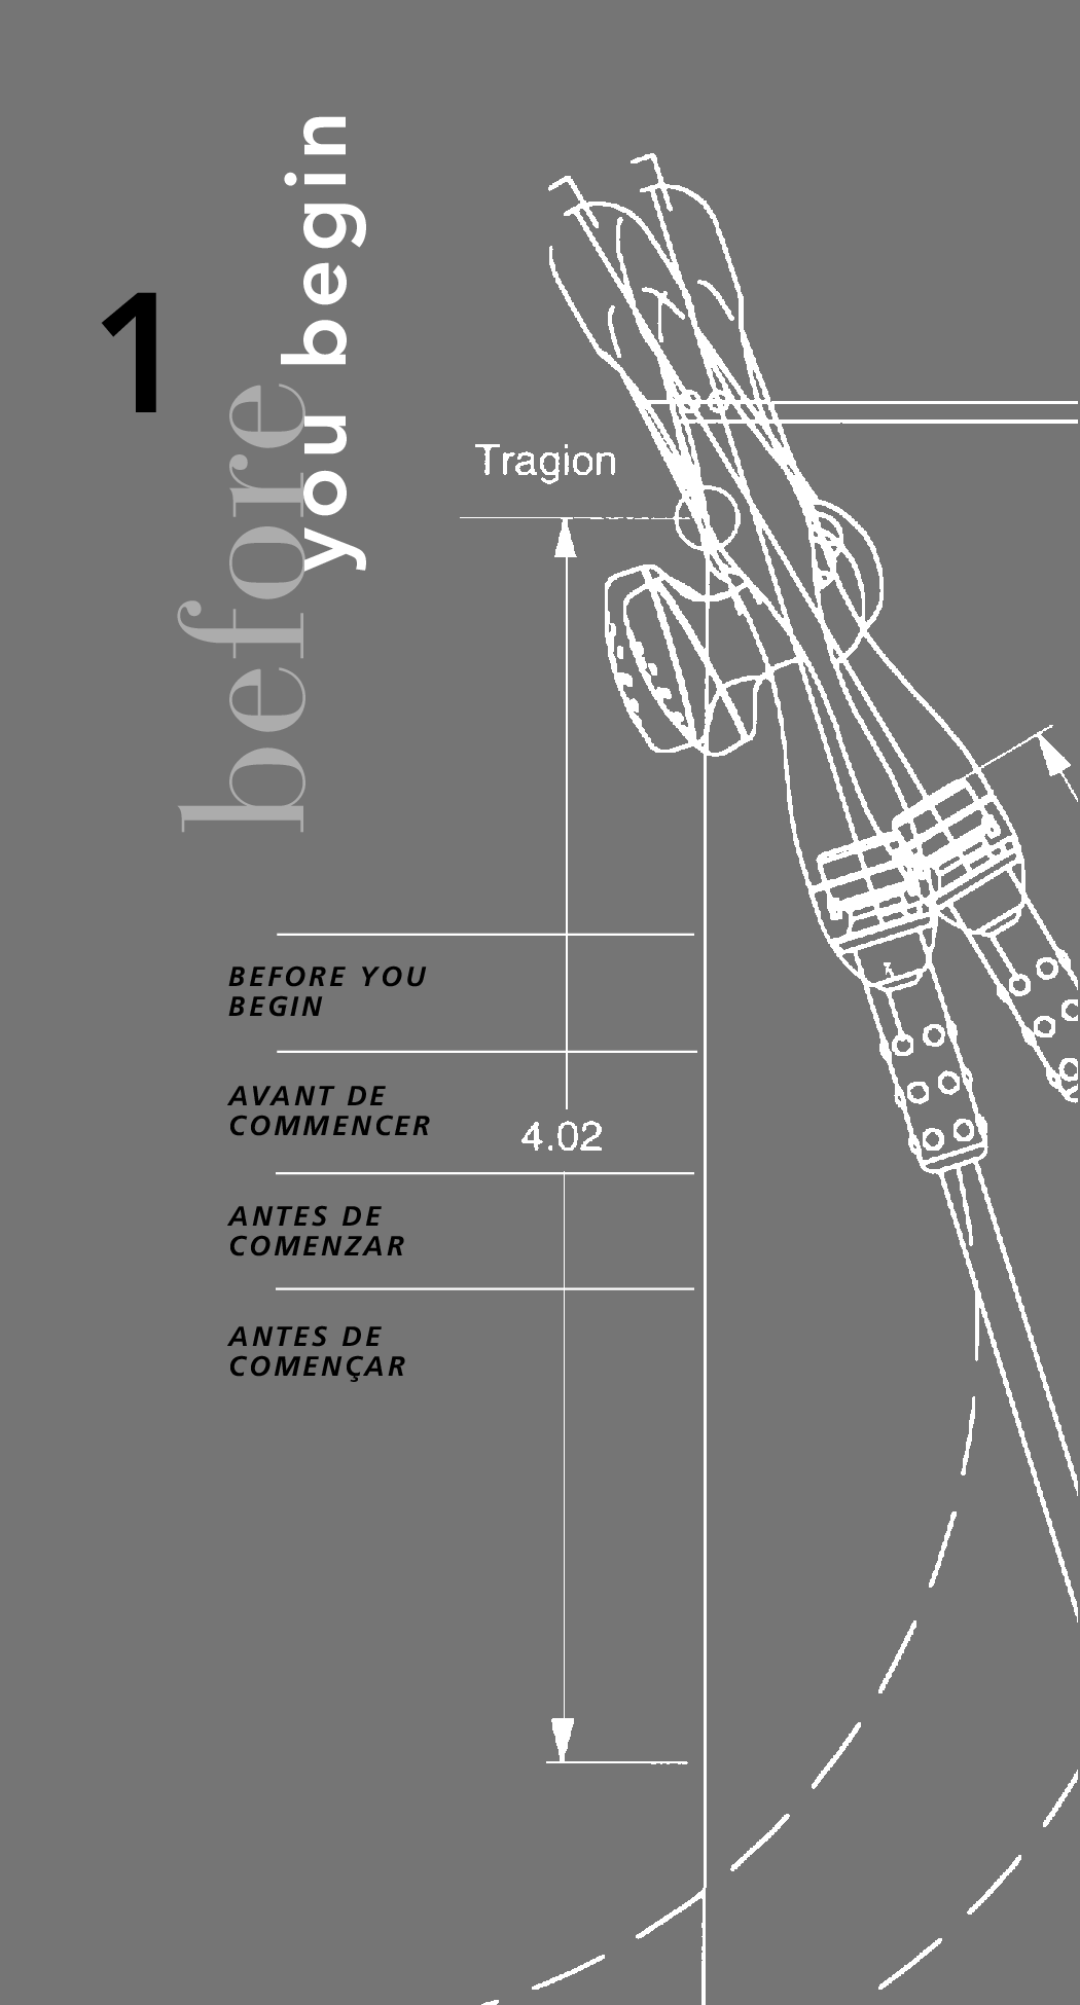 Plantronics TriStar Headset manual begin, before, Before You Begin Avant De Commencer Antes De, Comenzar Antes De Començar 